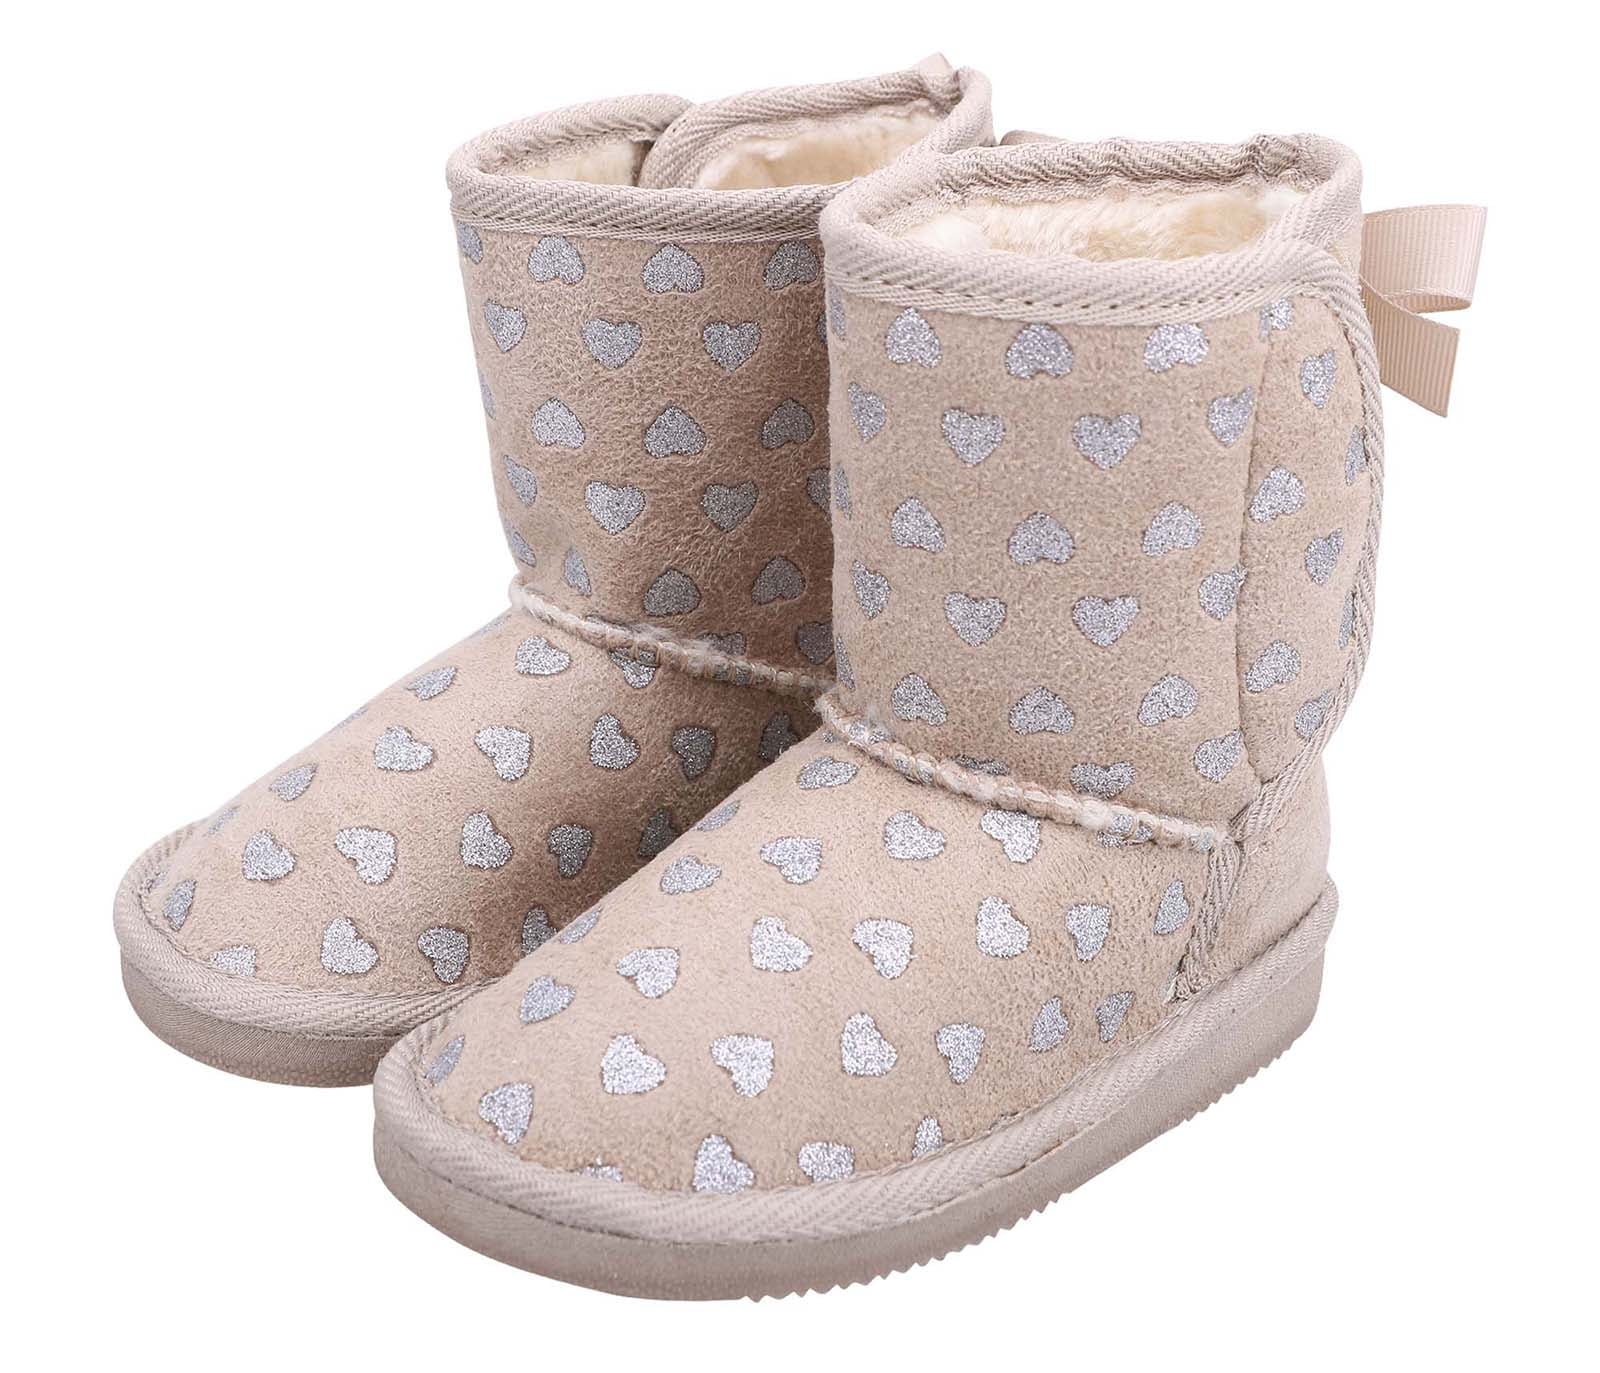 8 NWT Baby Gap Girl's Beige Faux Fur Gold Polka Dot Snow Boots Sz 6 $75 7 